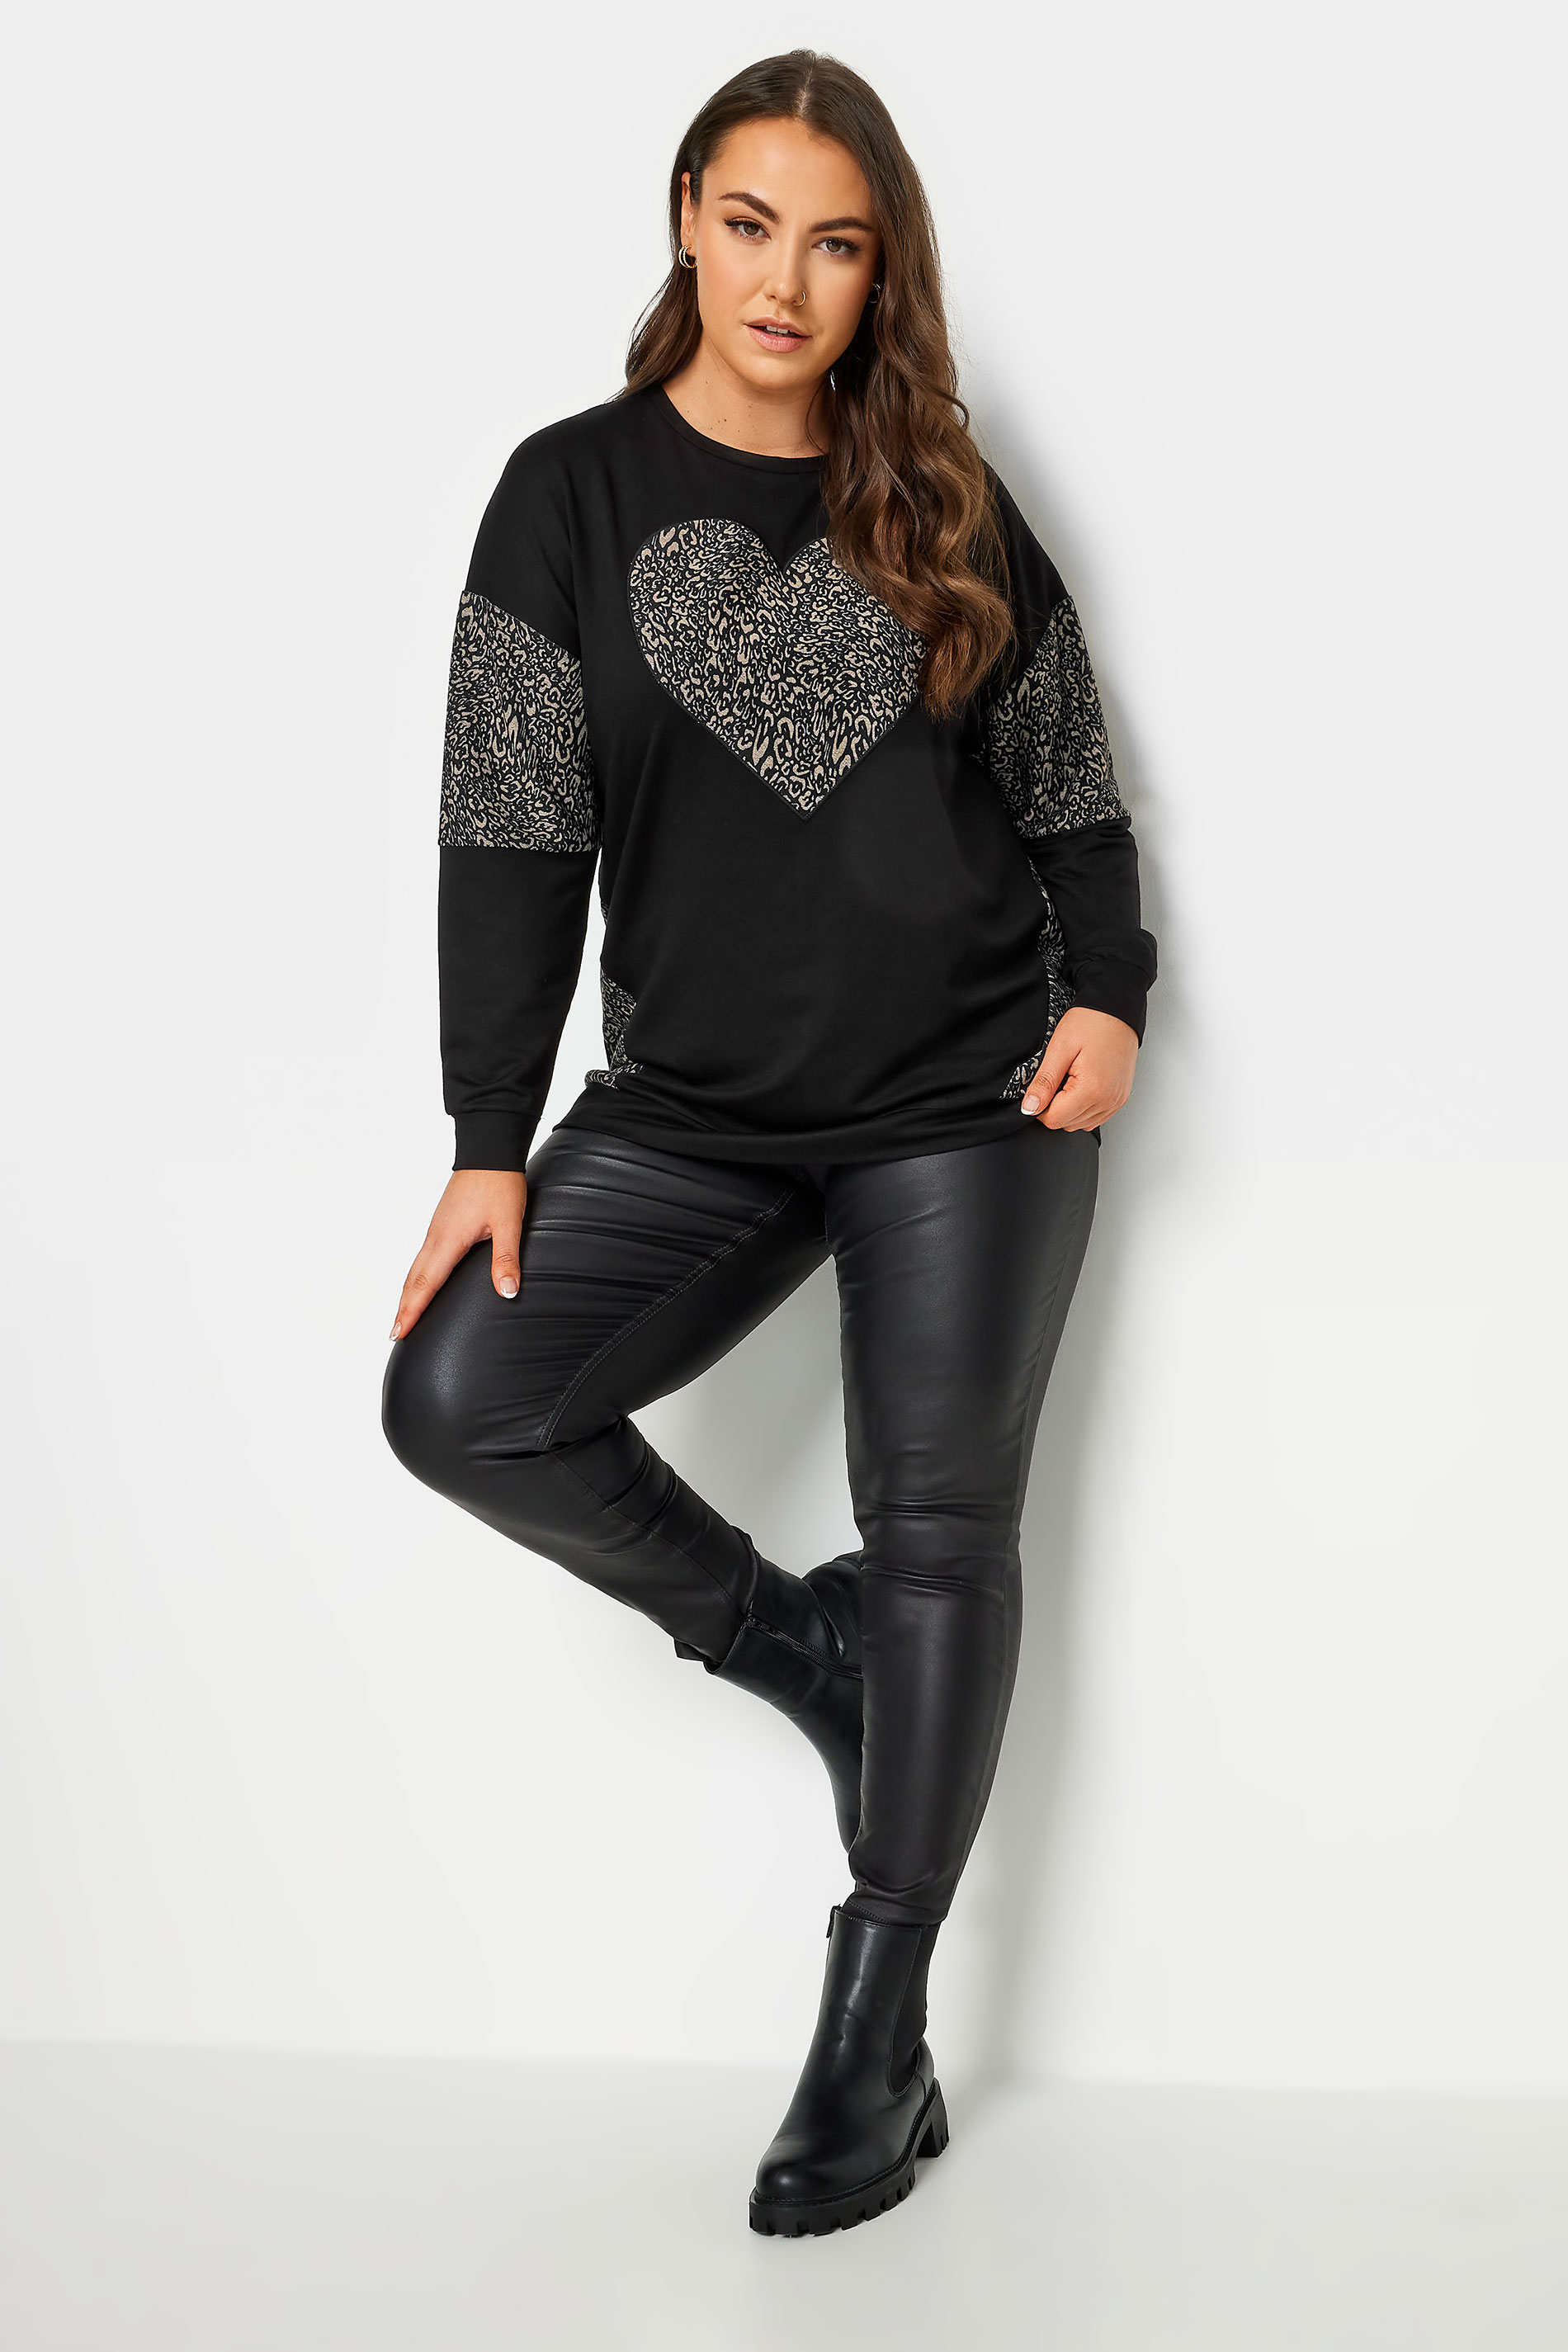 YOURS LUXURY Curve Plus Size Black Leopard Heart Print Sweatshirt | Yours Clothing 2